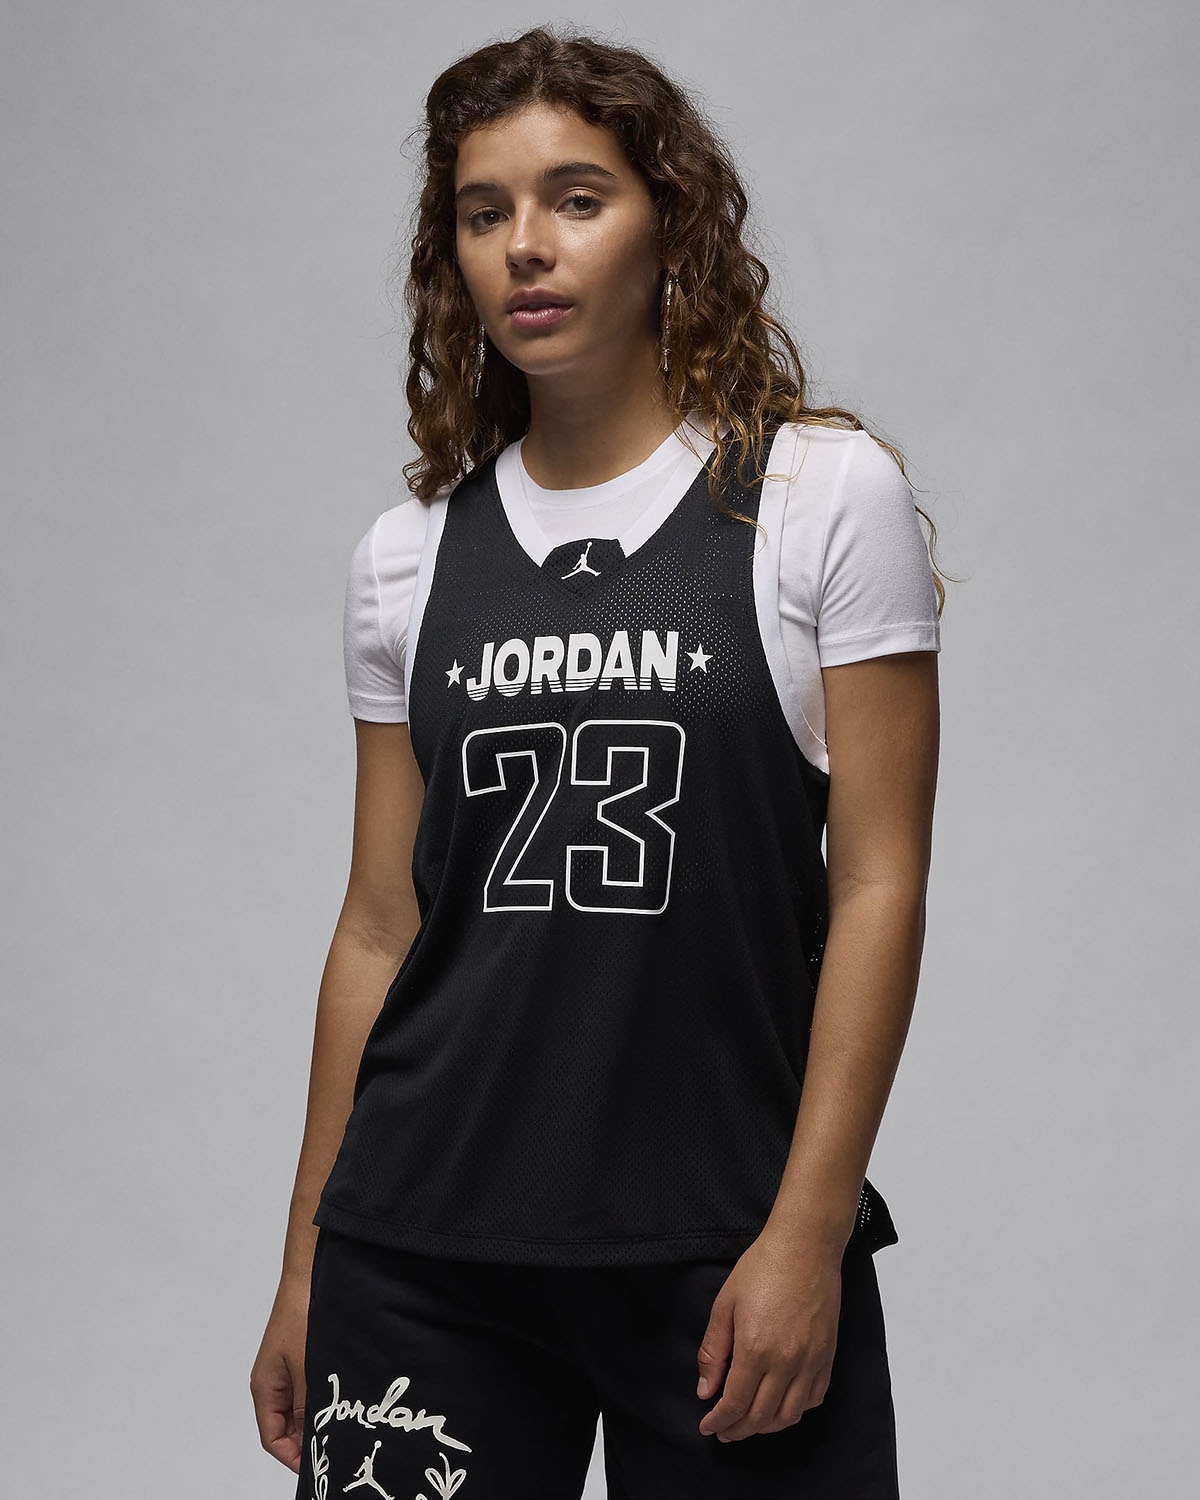 Jordan 23 Jersey Womens Tank Top Black White